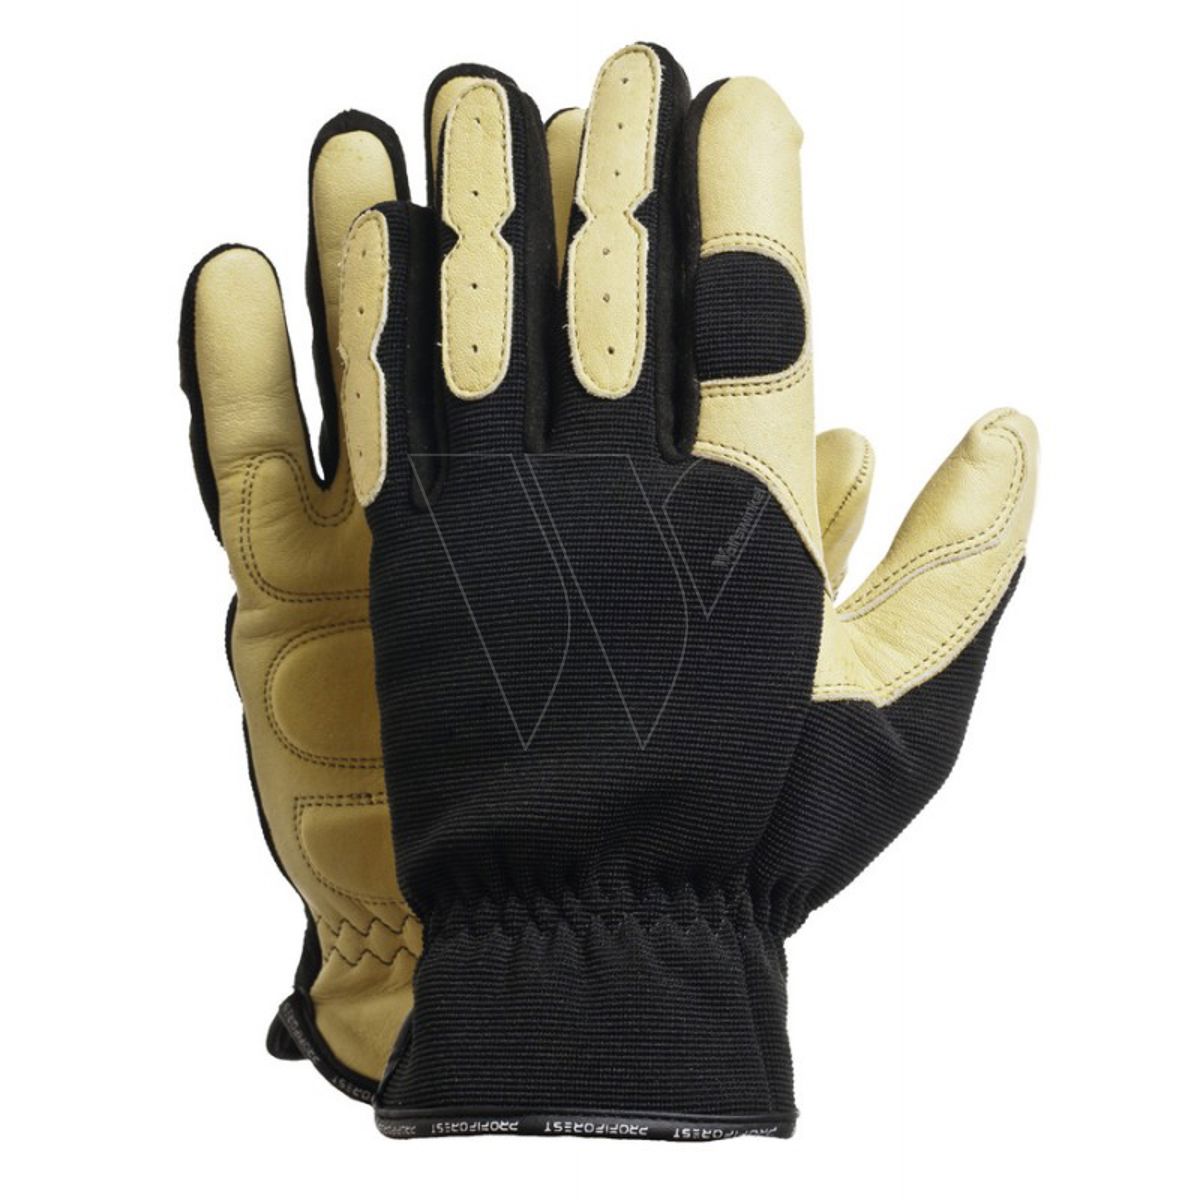 Profiforest antivibration glove 9